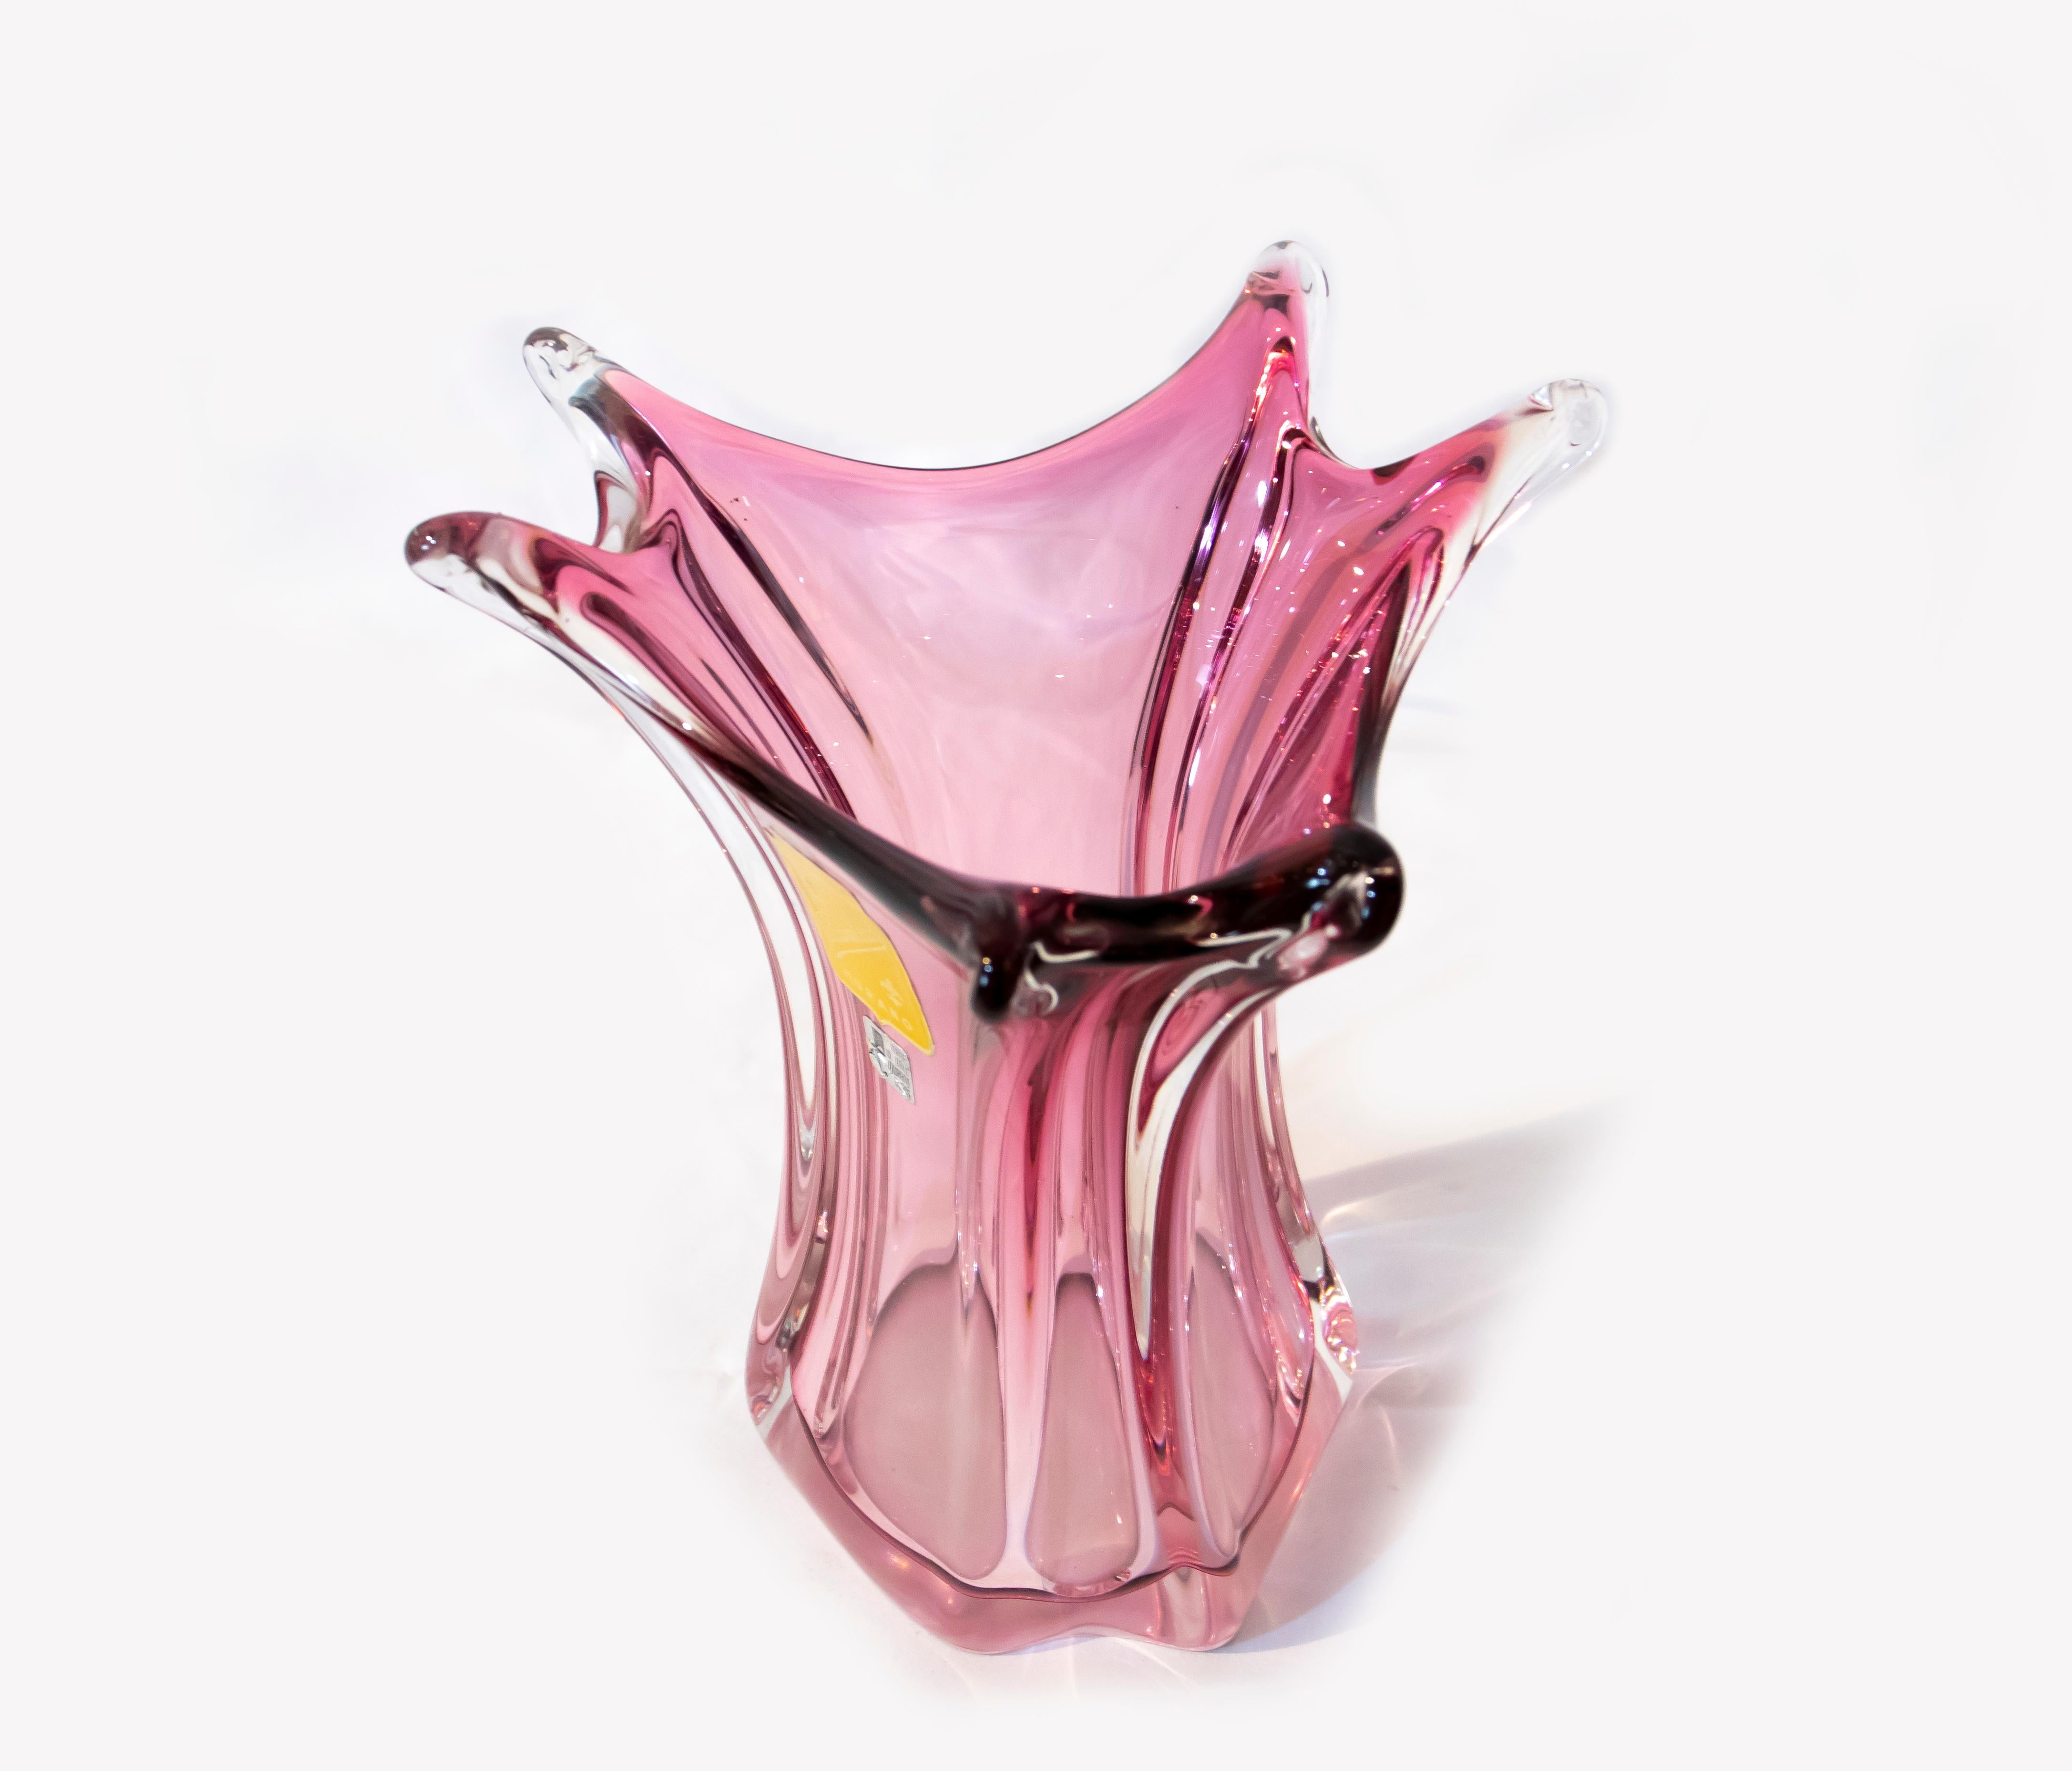 antique glass vases